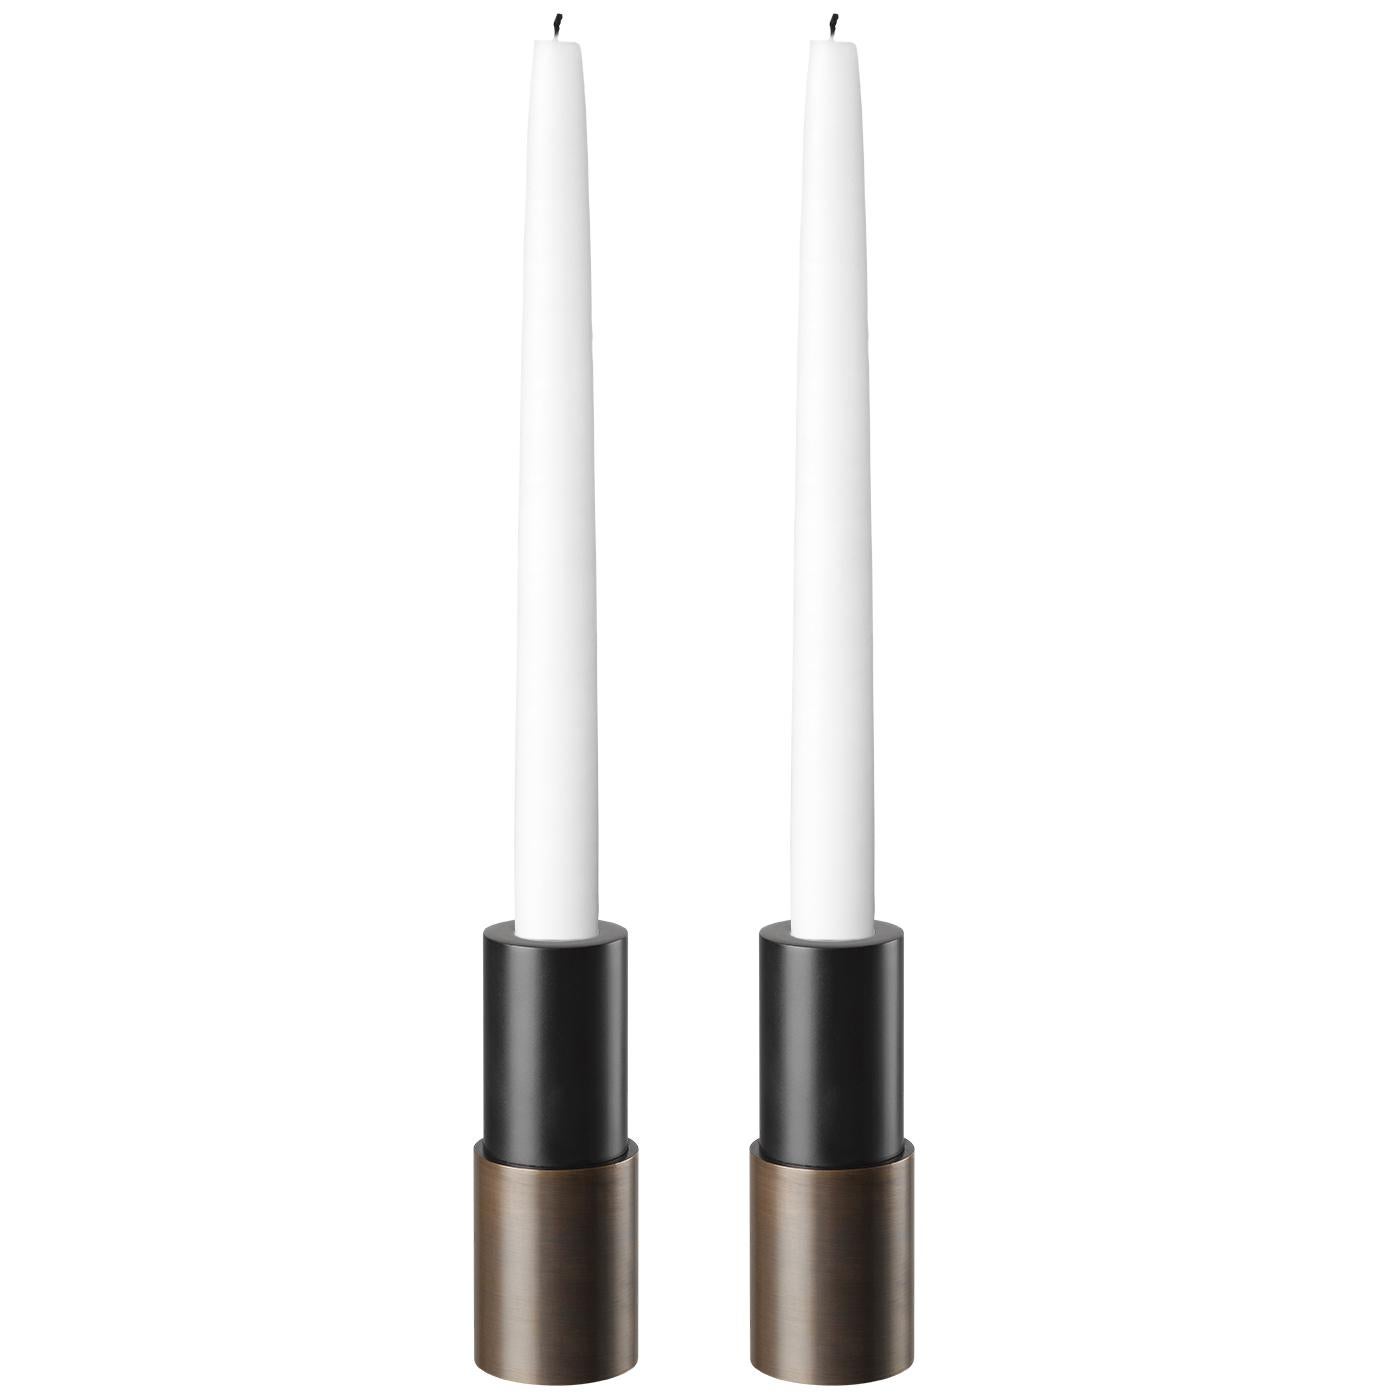 Pair of Candlesticks Model #17 by Space Copenhagen for Gubi For Sale 8